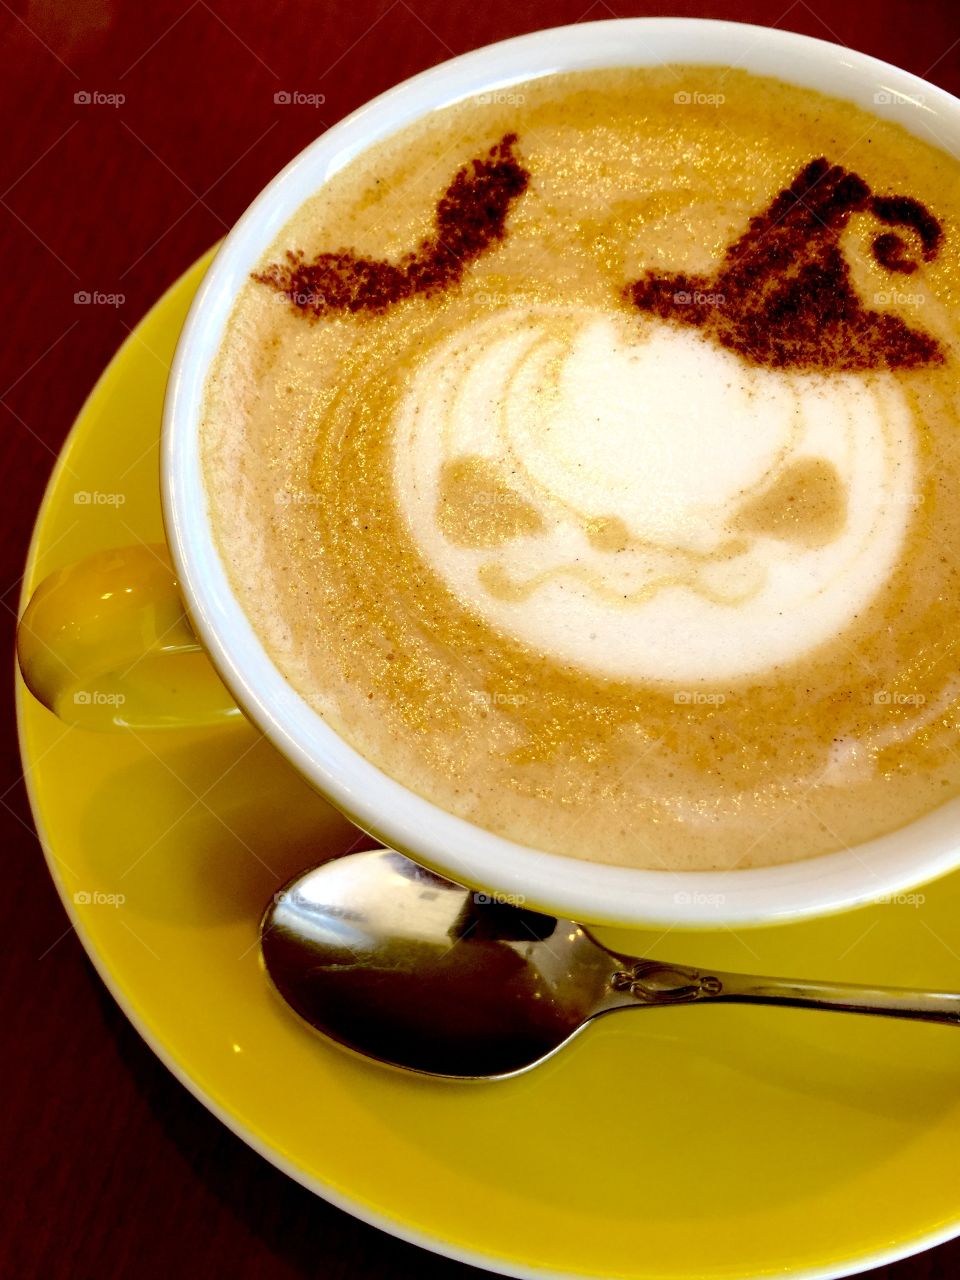 Halloween cappuccino!